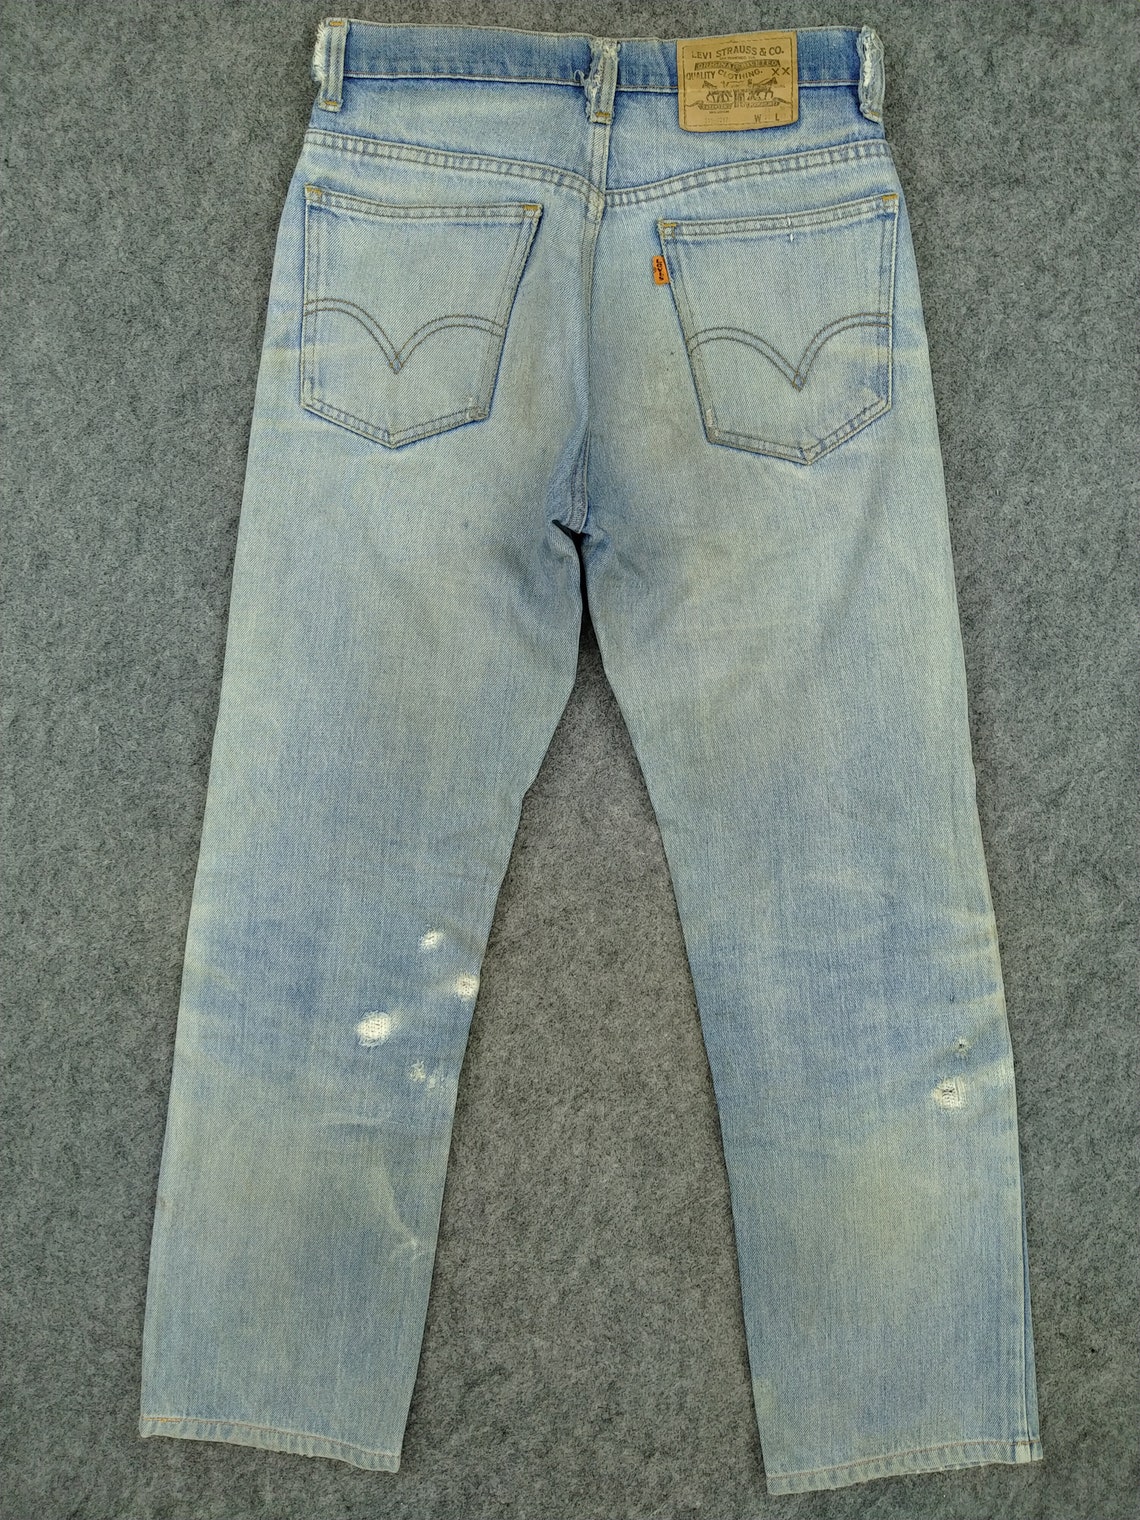 Vintage Levi's 515 Orange Tab Jeans 28x28 Light Wash Denim | Etsy